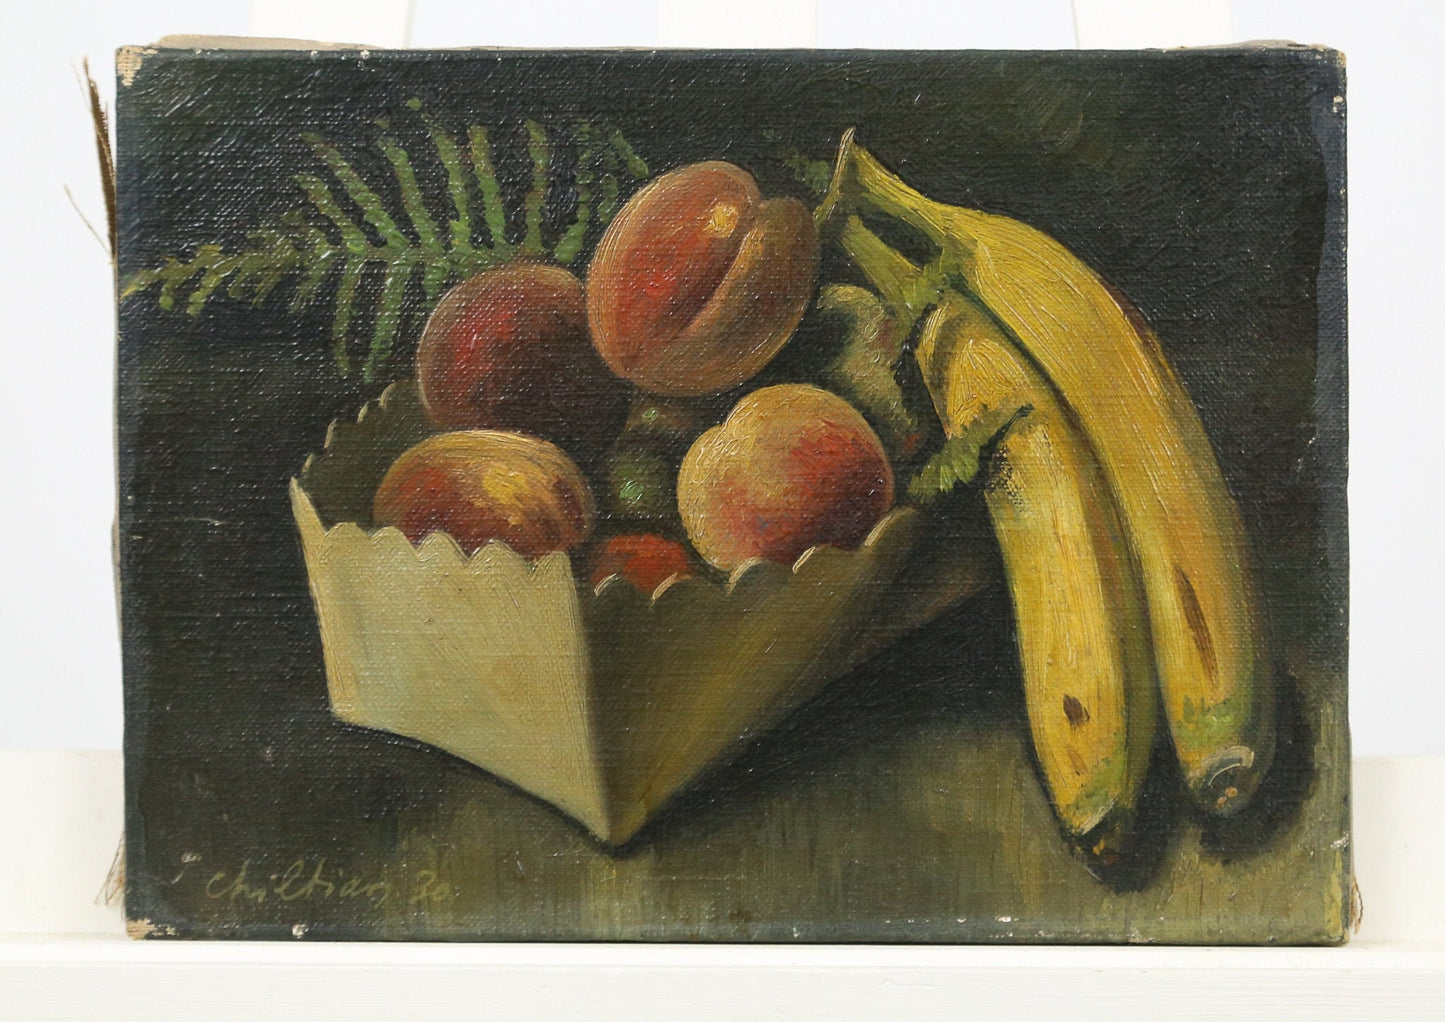 Painting Grigor Chiltian Still Life Peaches Bananas Signed 1930 Suggestive Gay Erotic Art Fruit Armenian Gregory Sciltian Gregorio Sciltian